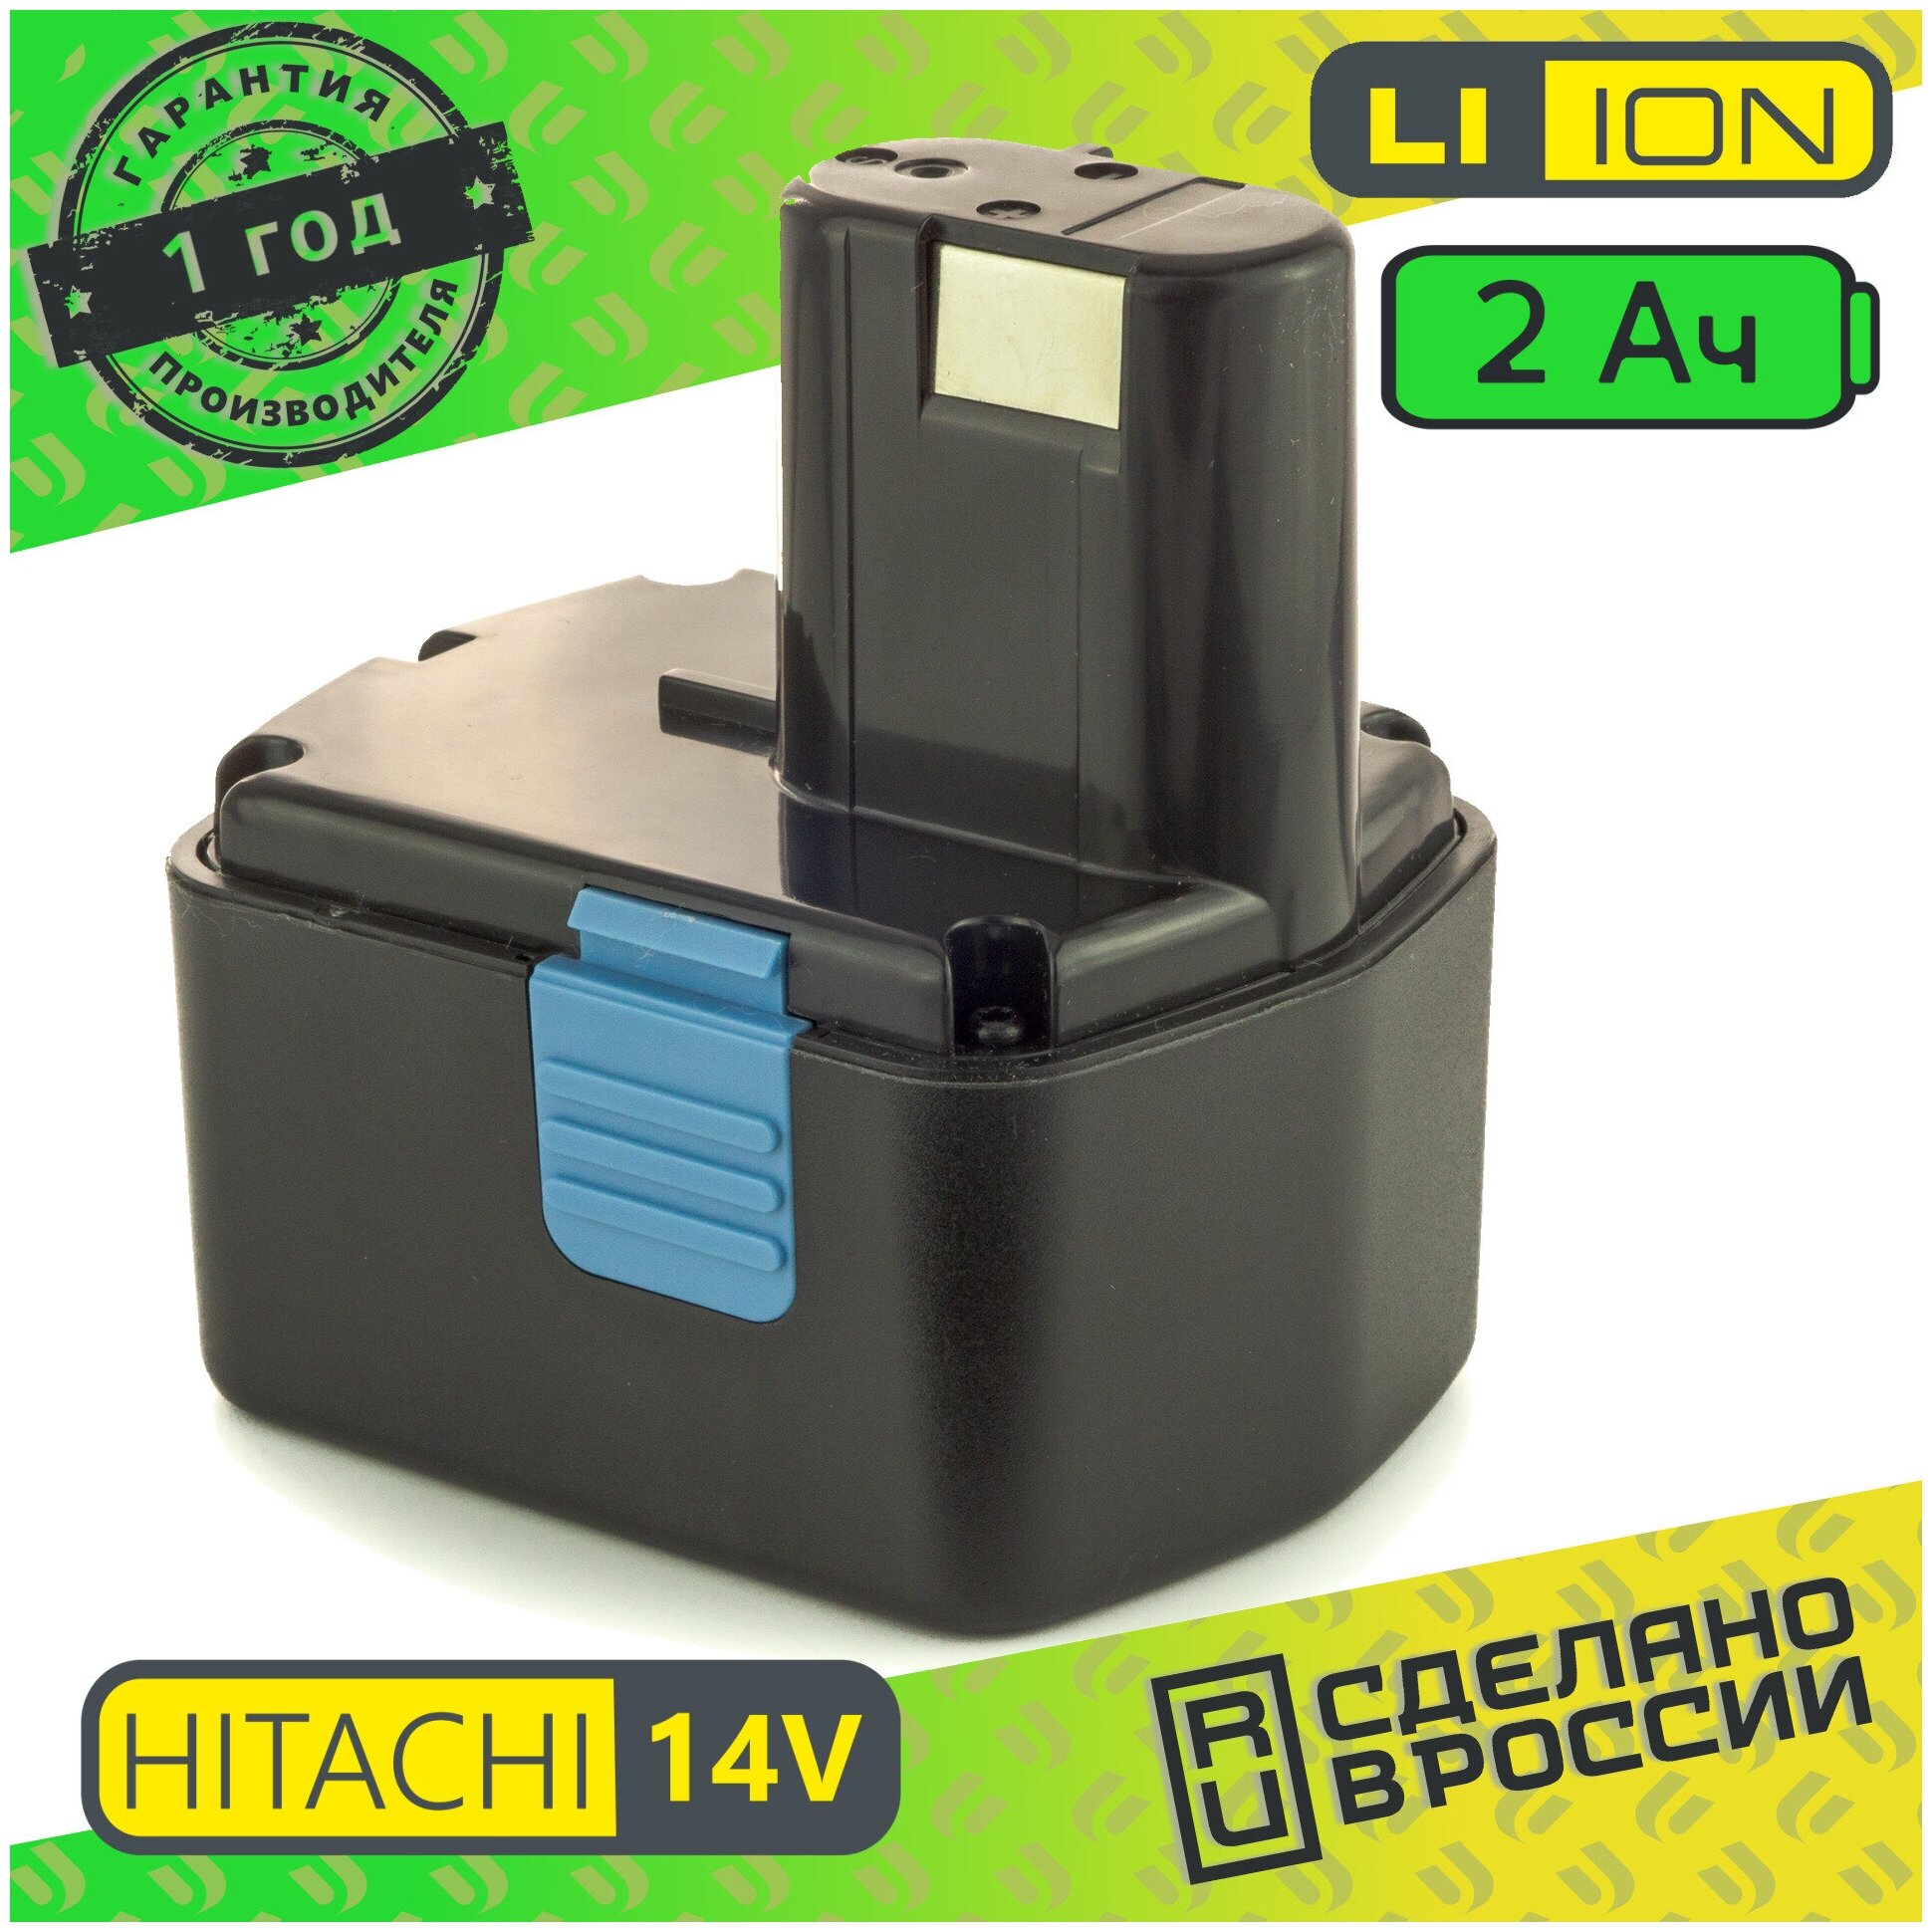 Аккумулятор для шуруповерта Hitachi EB1415 Li-ion 14.4V 2.0 ah